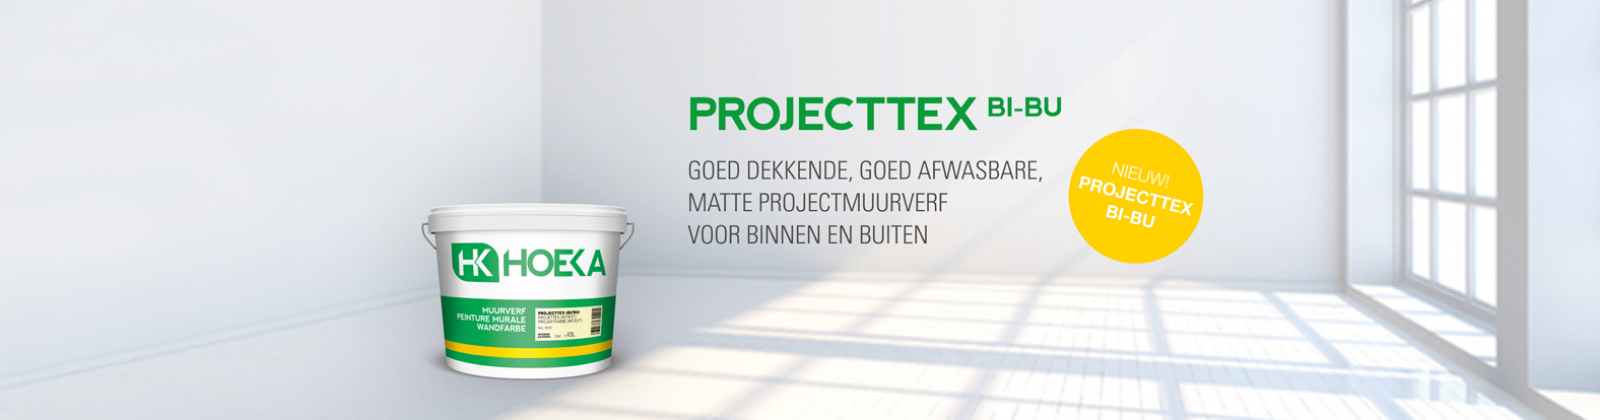 HOEKA Projecttex bi-bu